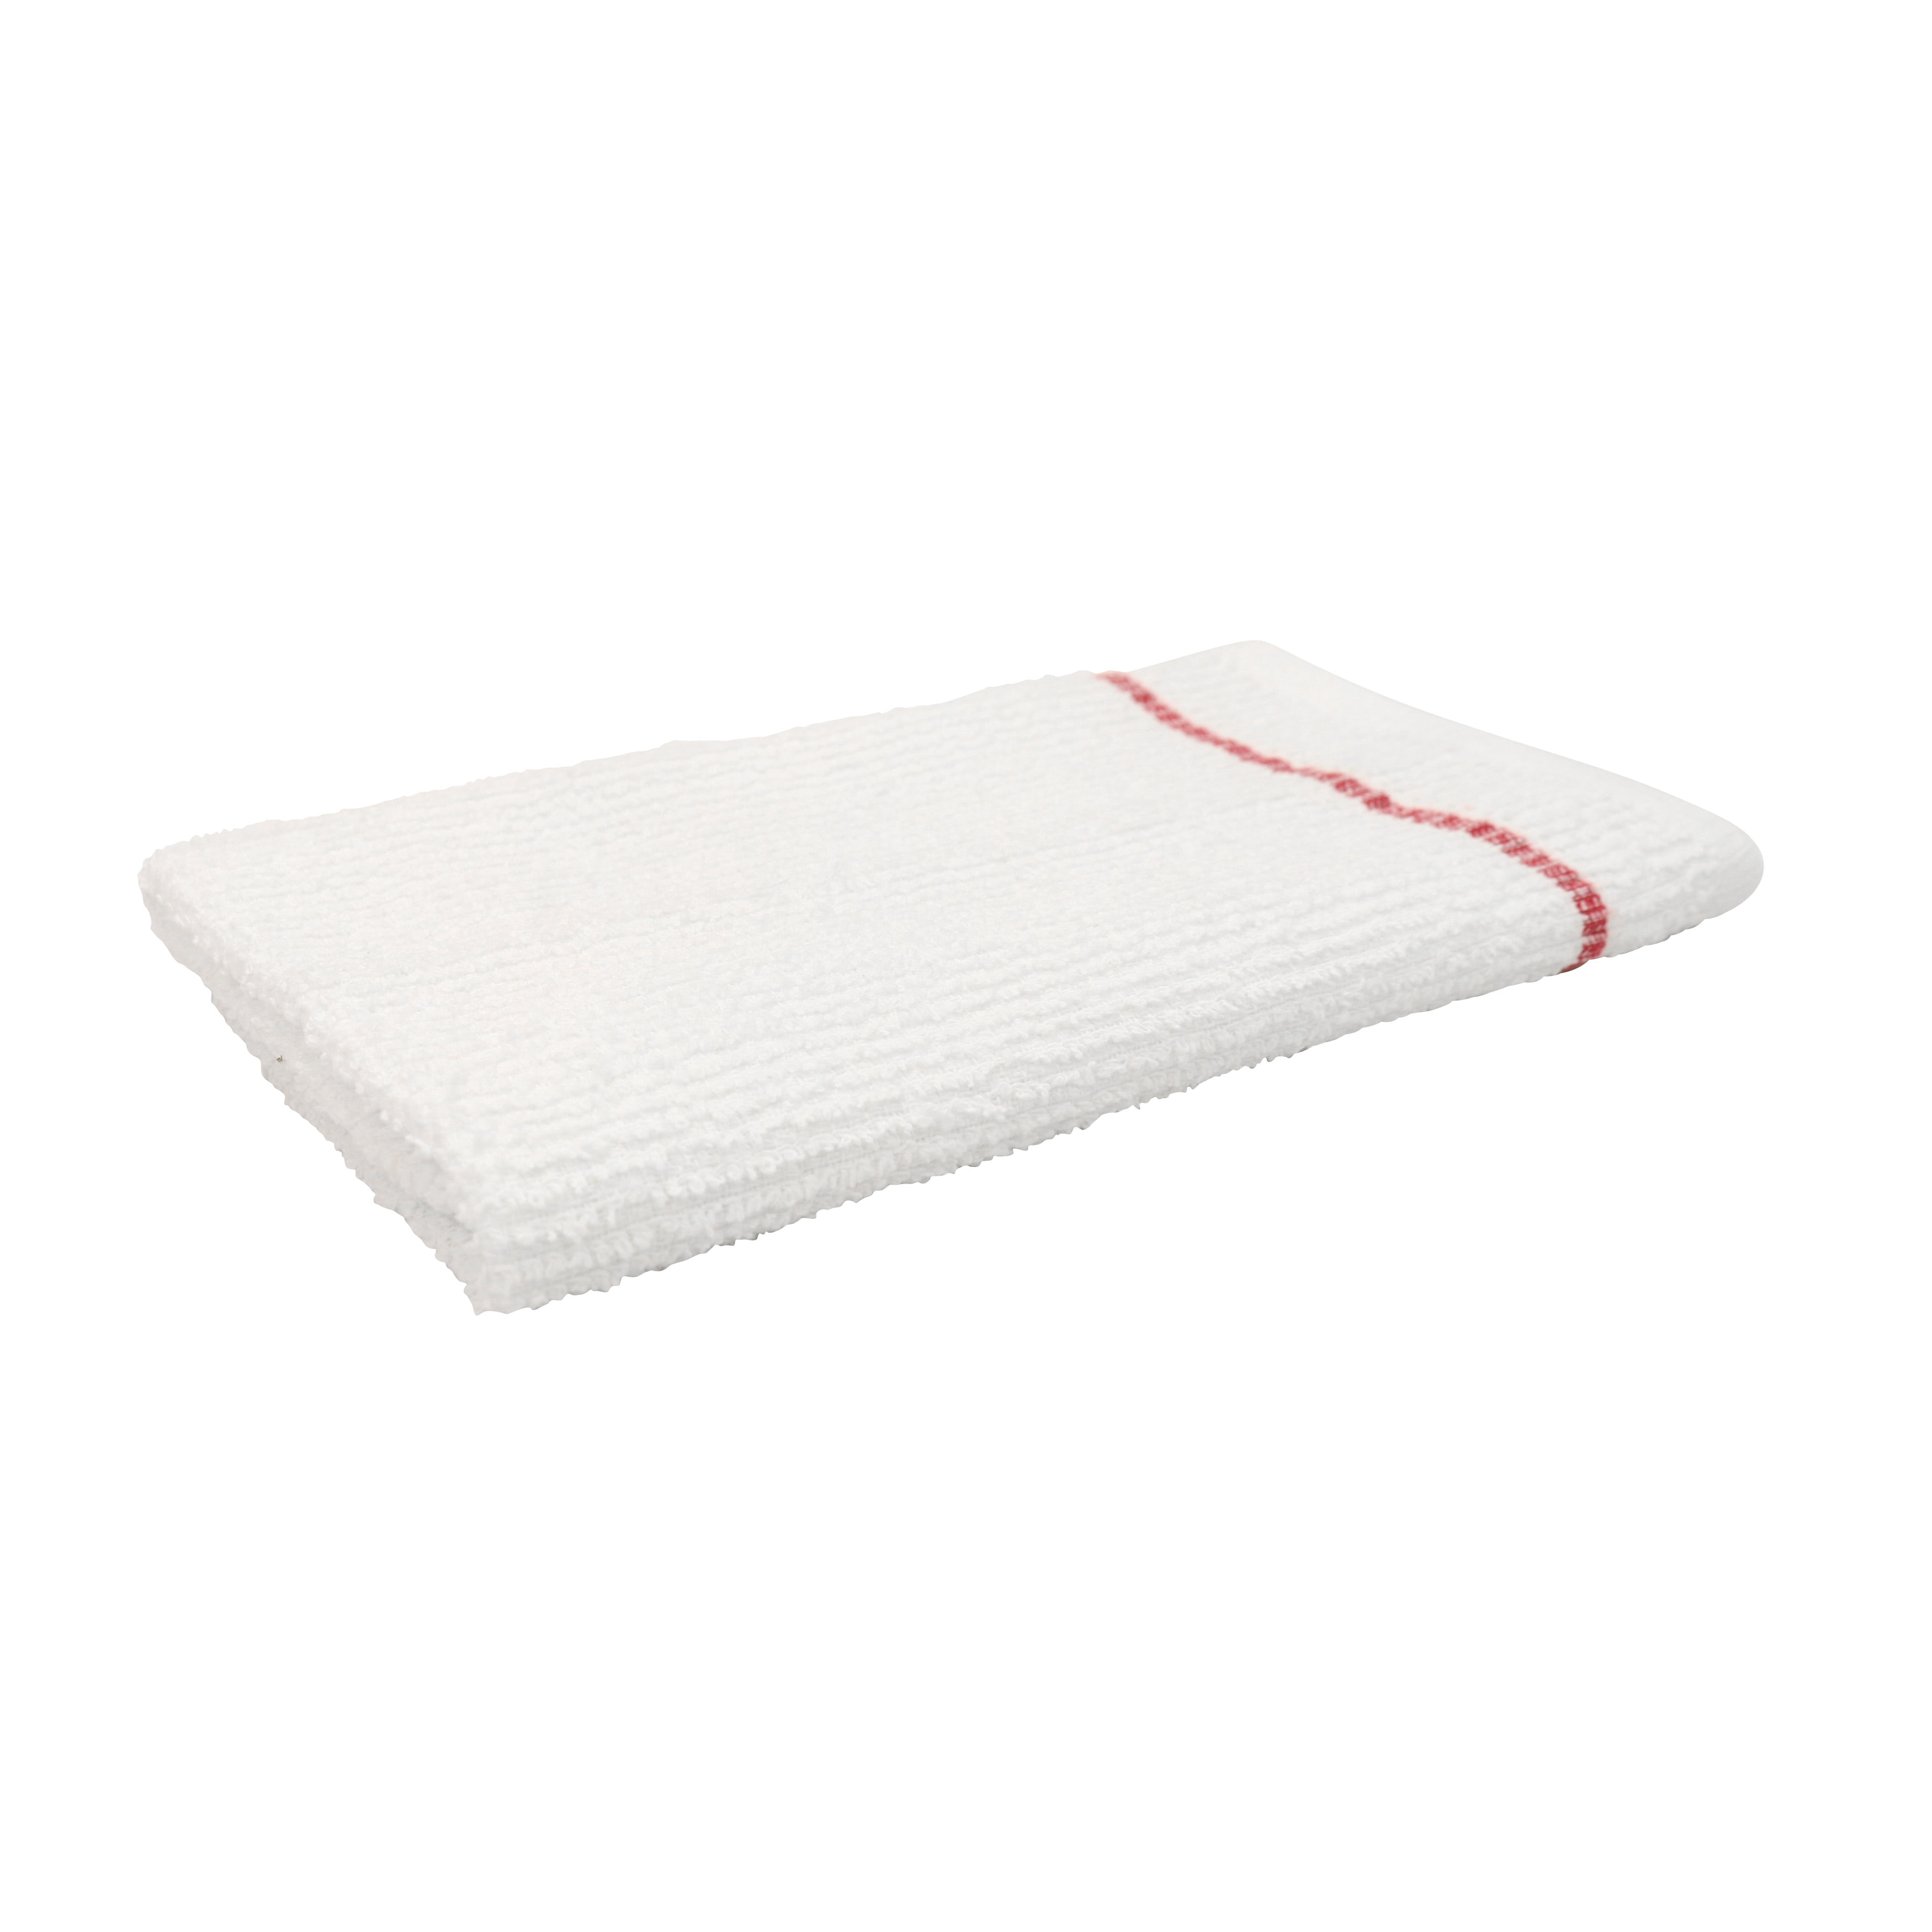 Ribbed Bar Mop Grey Organic Cotton Dish Towels, Set of 4